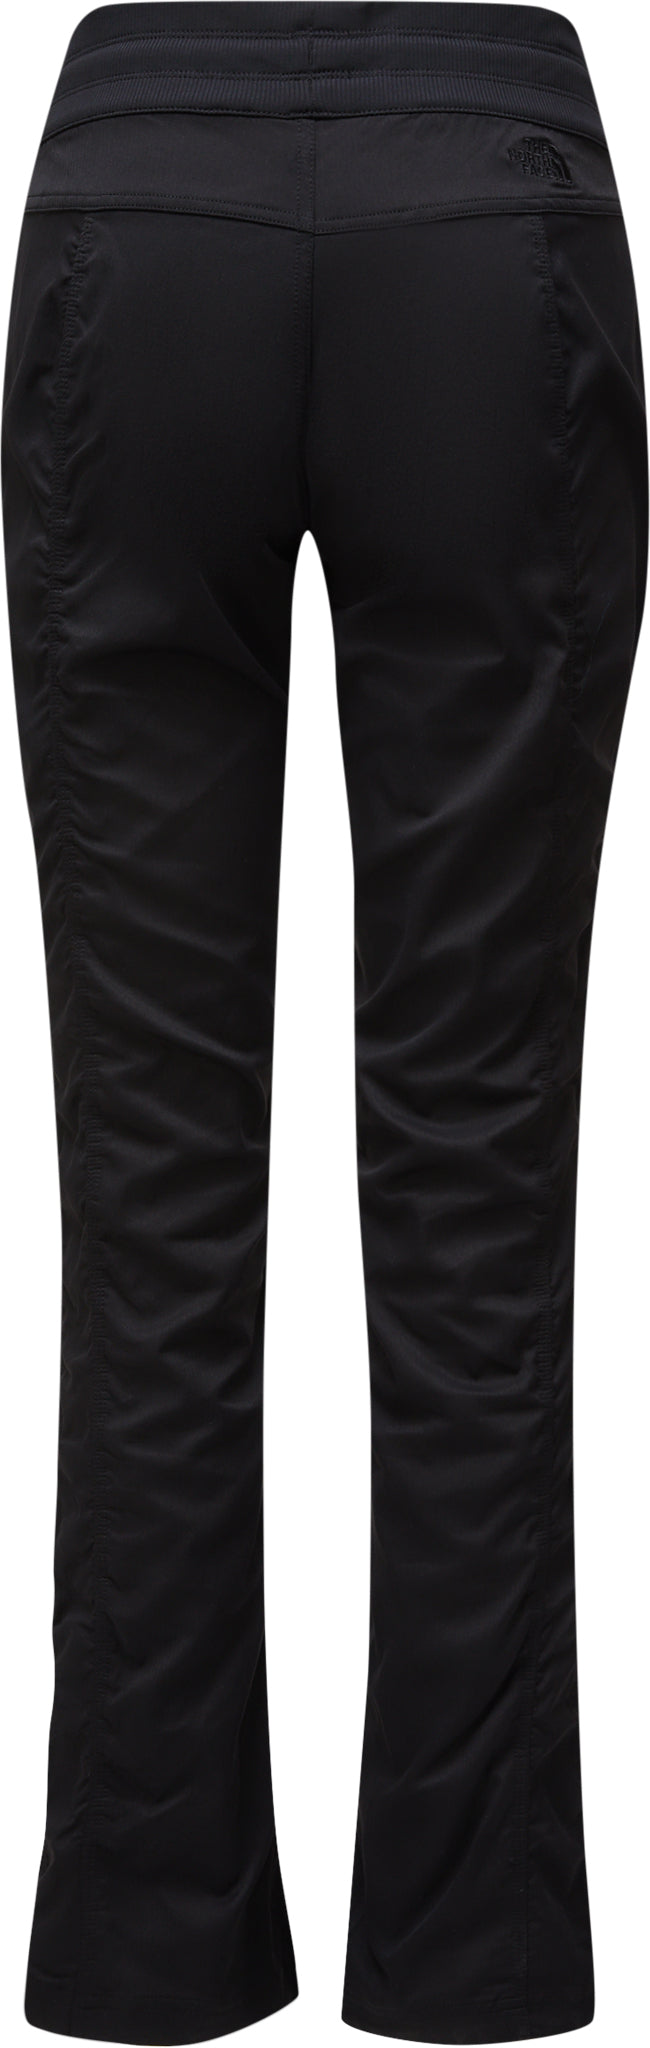 Balance Collection Women's High Rise Leggins Yoga Pants Zip Pocket 27'',  Black